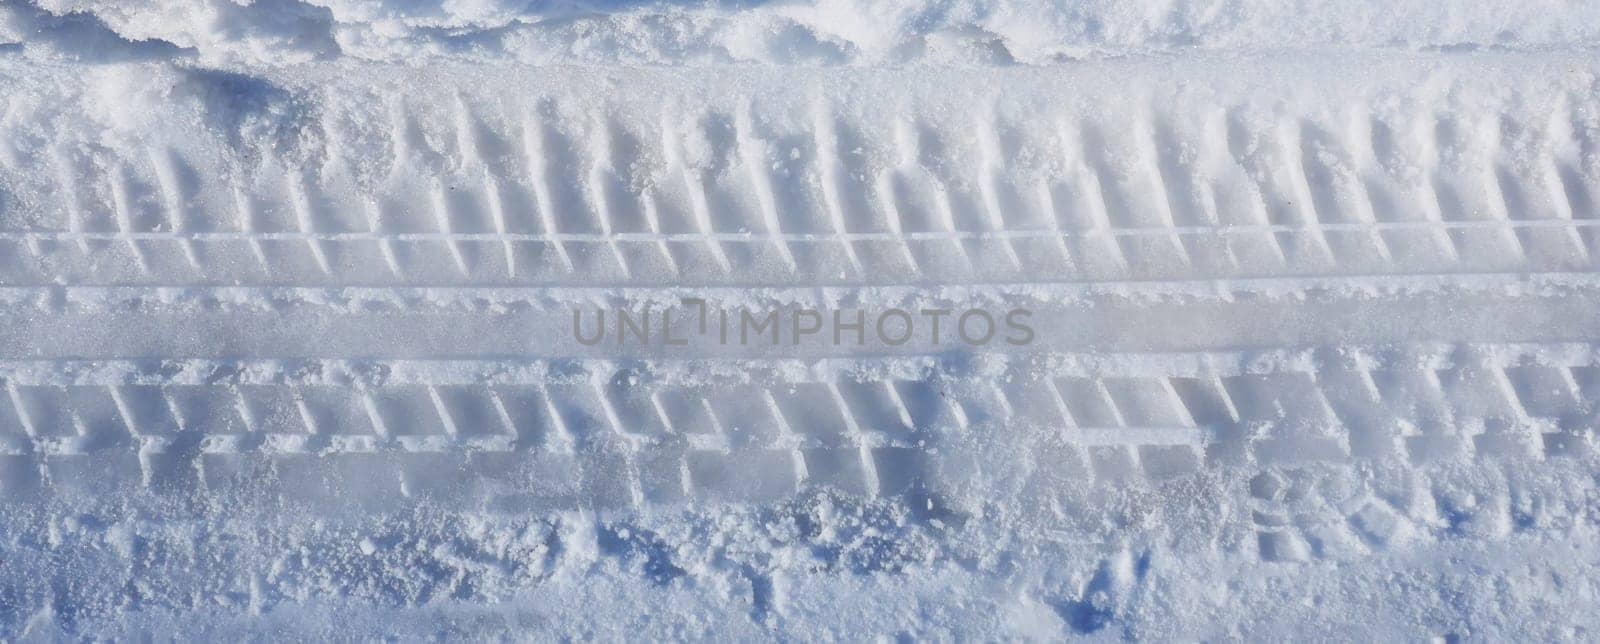 car tire marks on the snow, tire marks on the snow,